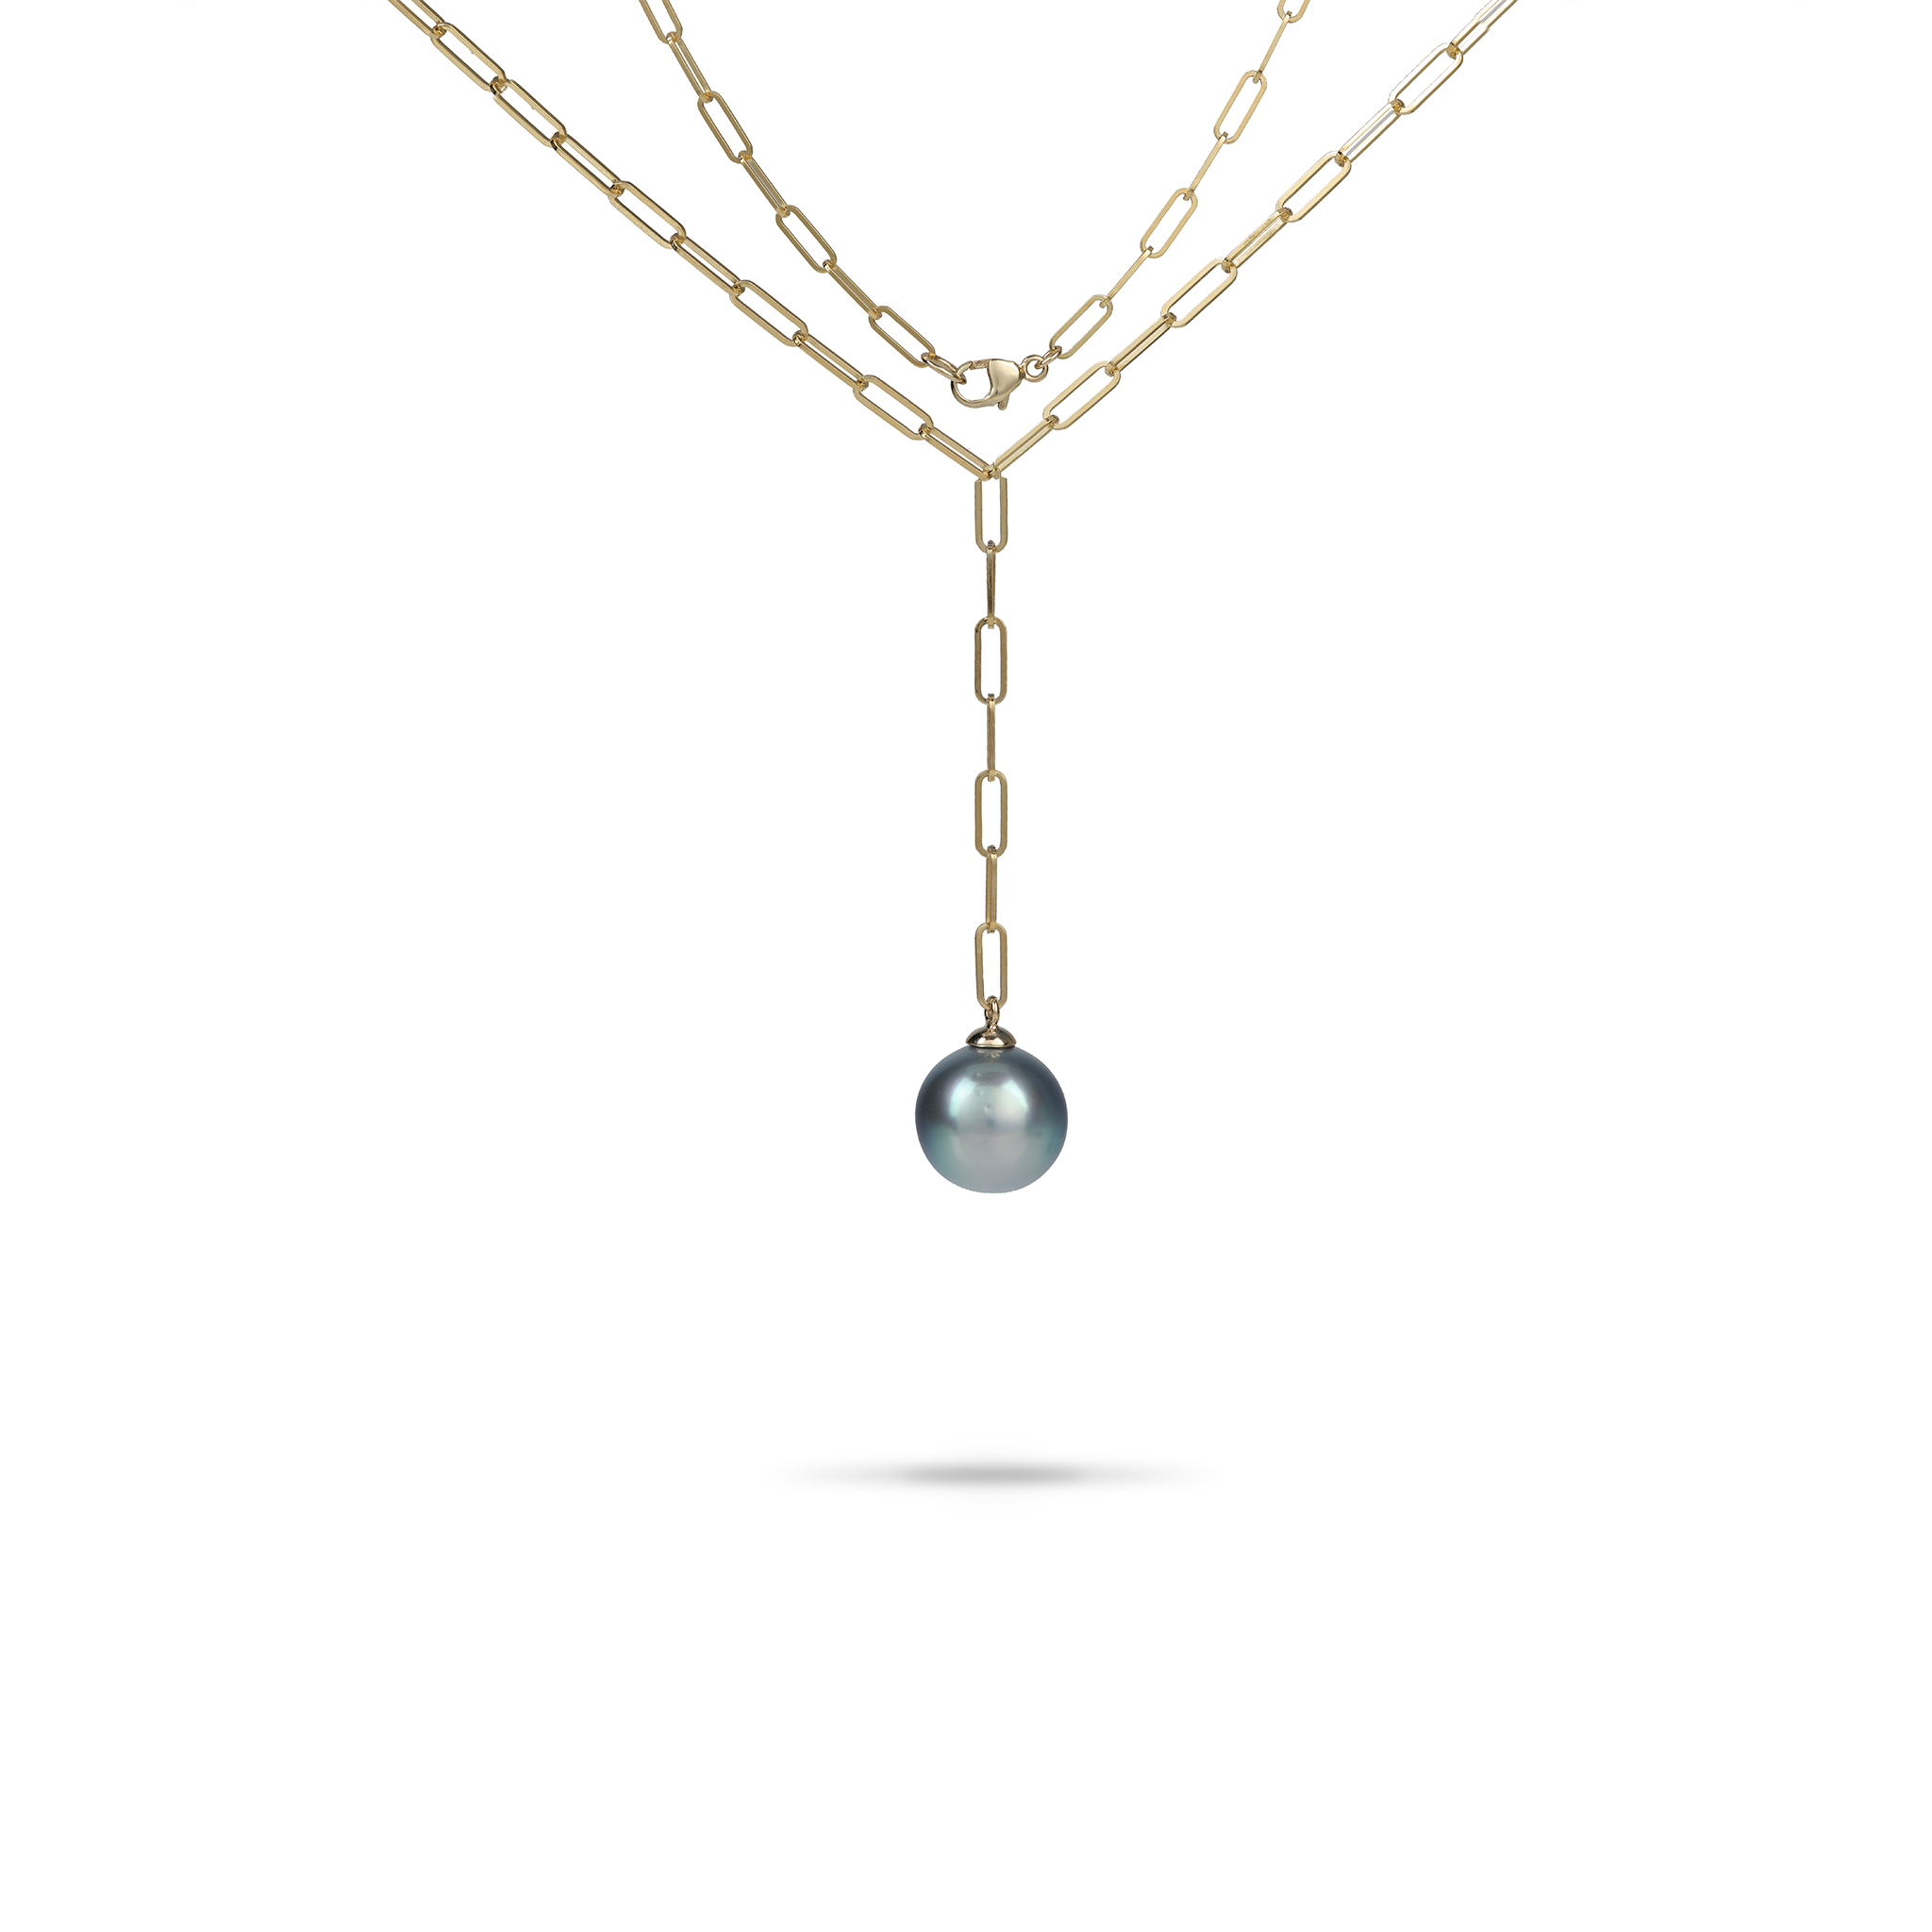 18 "Collier de perle noir tahitien en or - 12-14 mm